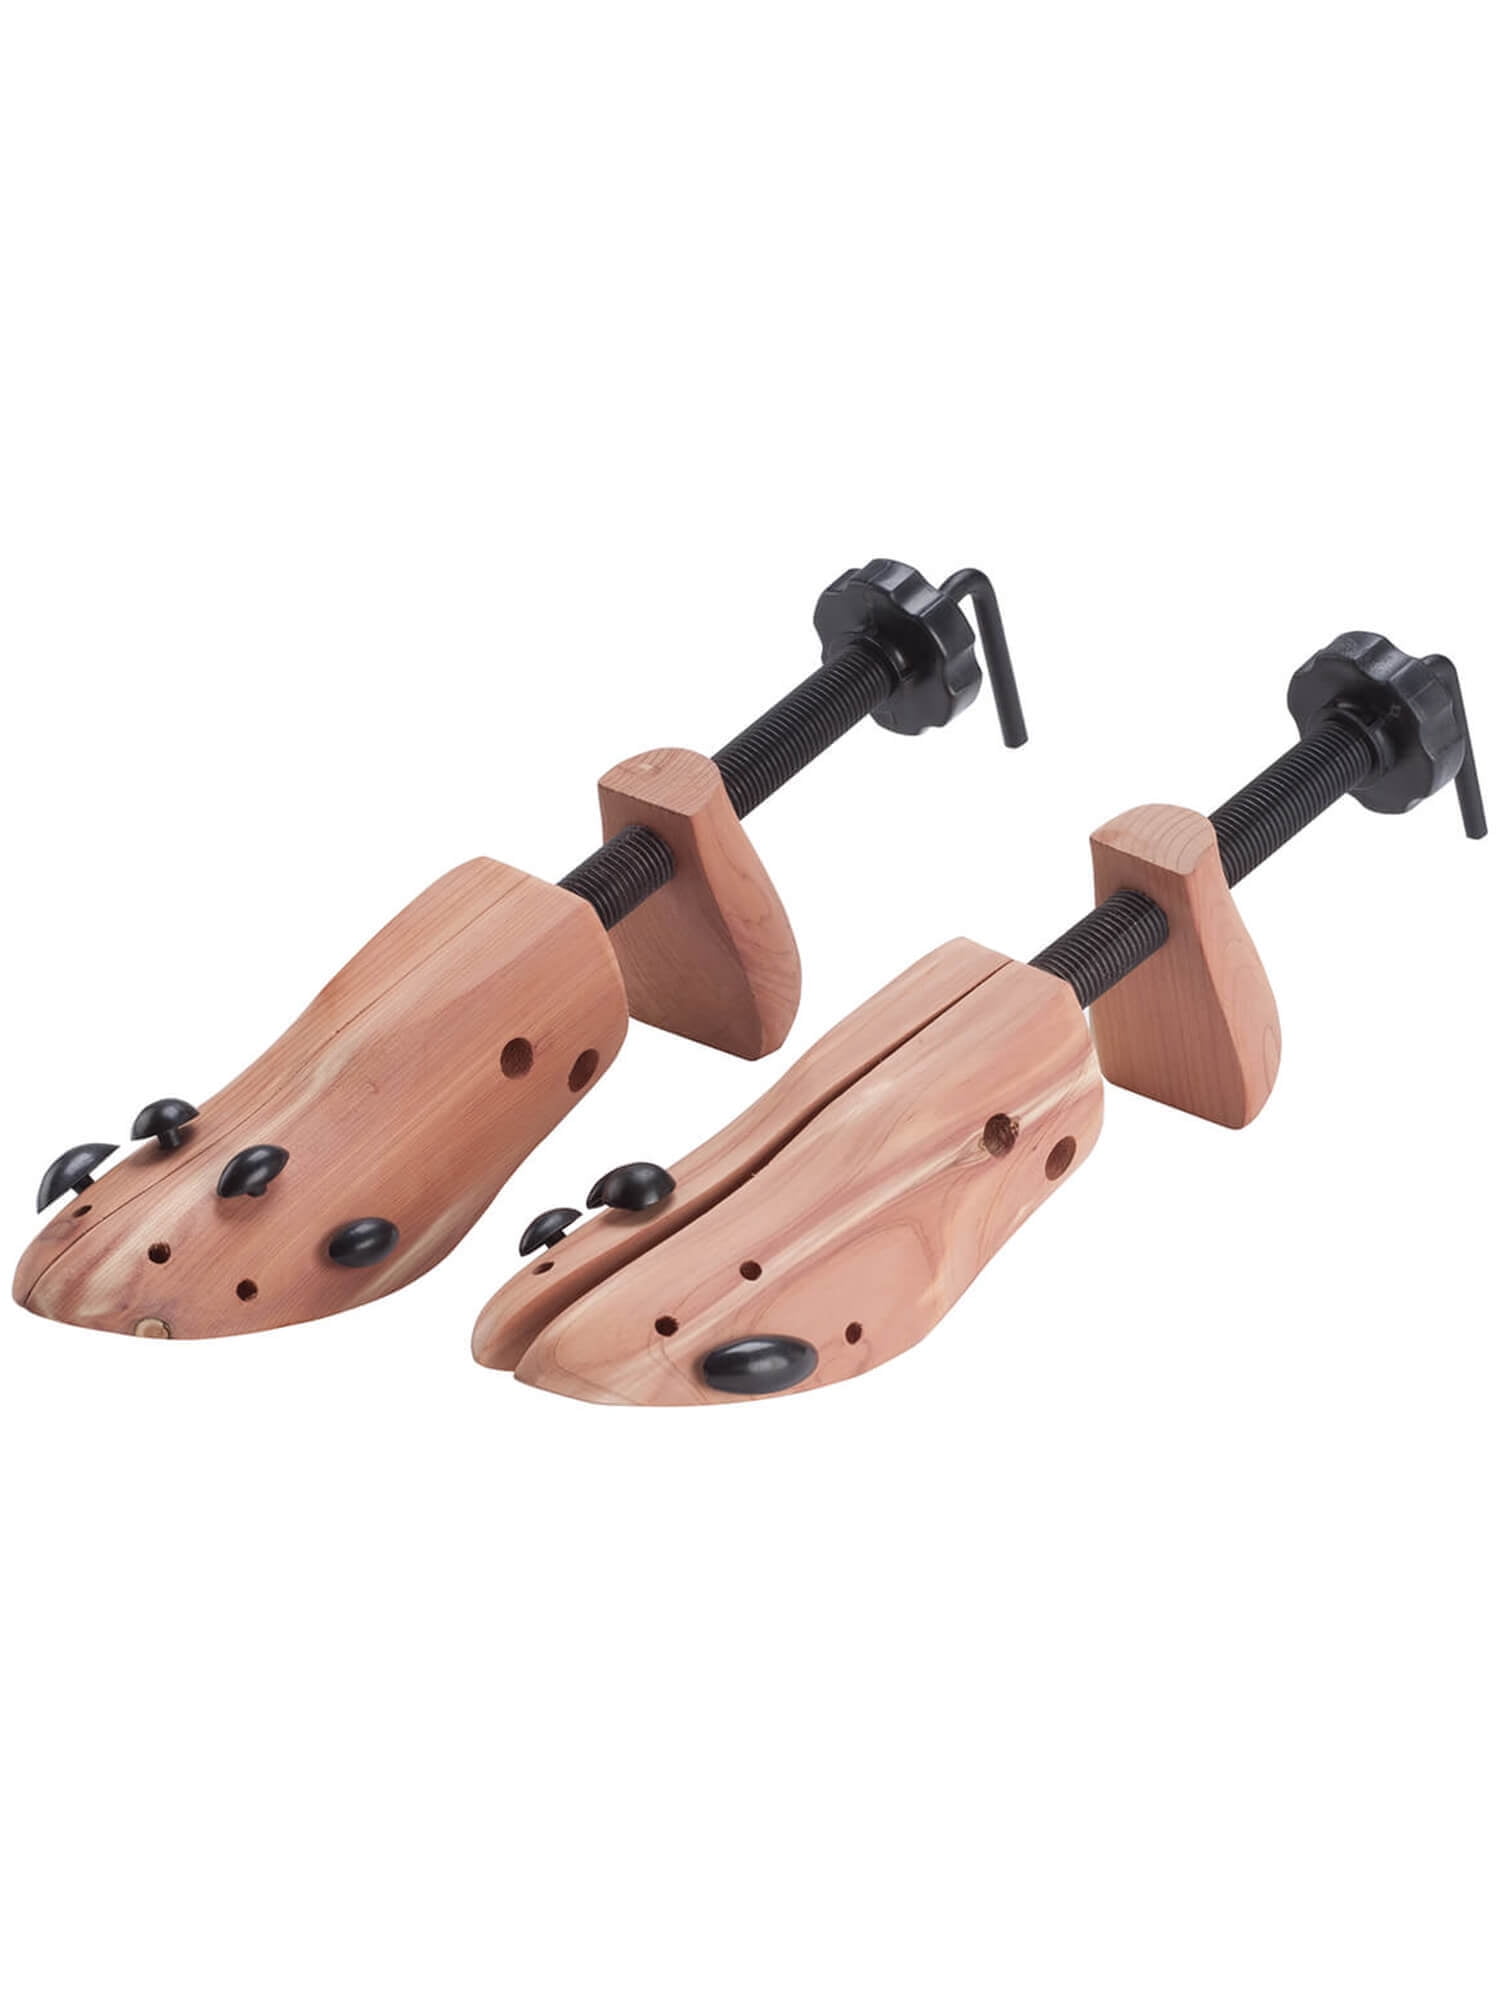 Plixio Pair of Adjustable Wooden Shoe Stretcher 2 Way Expander US Mens Size 9-12 